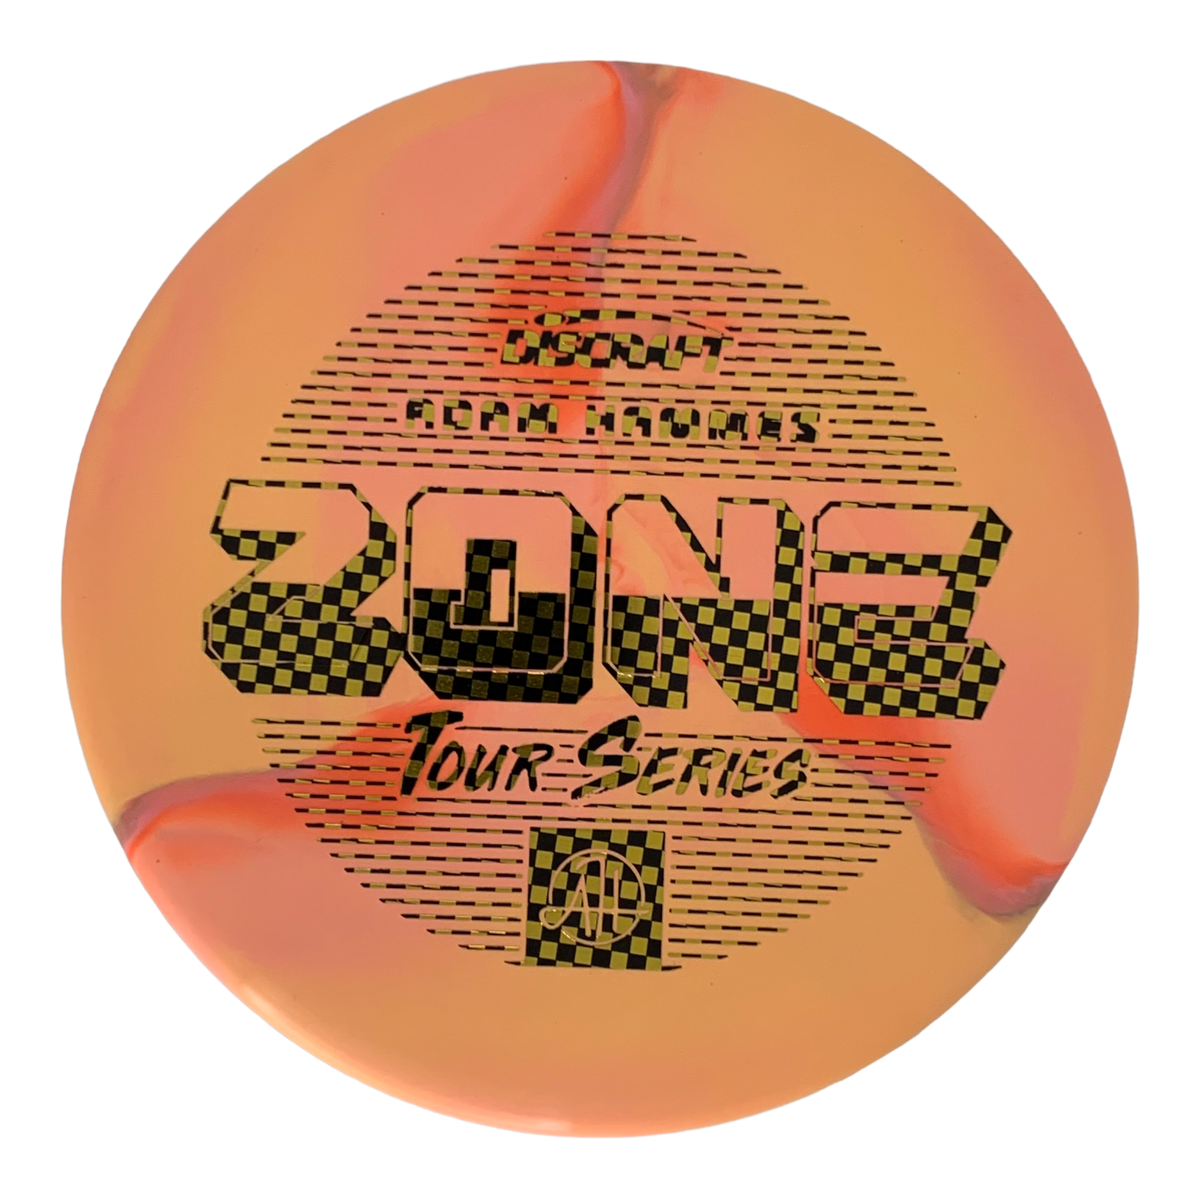 Discraft Adam Hammes ESP Swirl  Zone - 2022 Tour Series